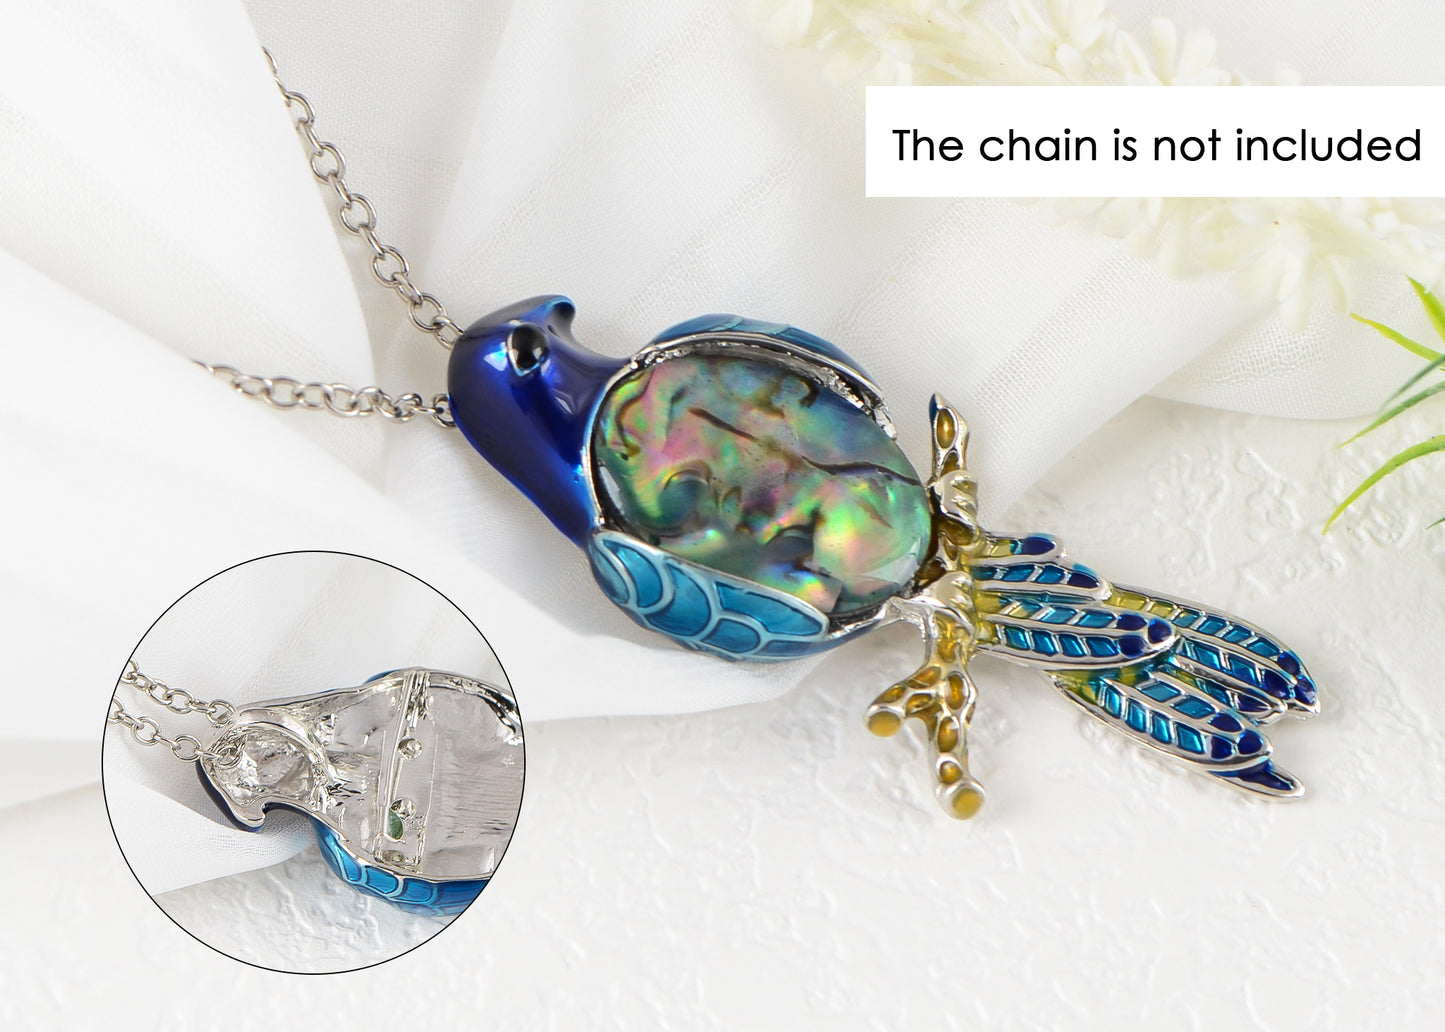 Alilang Multicolored Enamel Large Stones Bird Animal Brooch Pin Pendant Custom Jewelry Gifts for Women Teen Girls